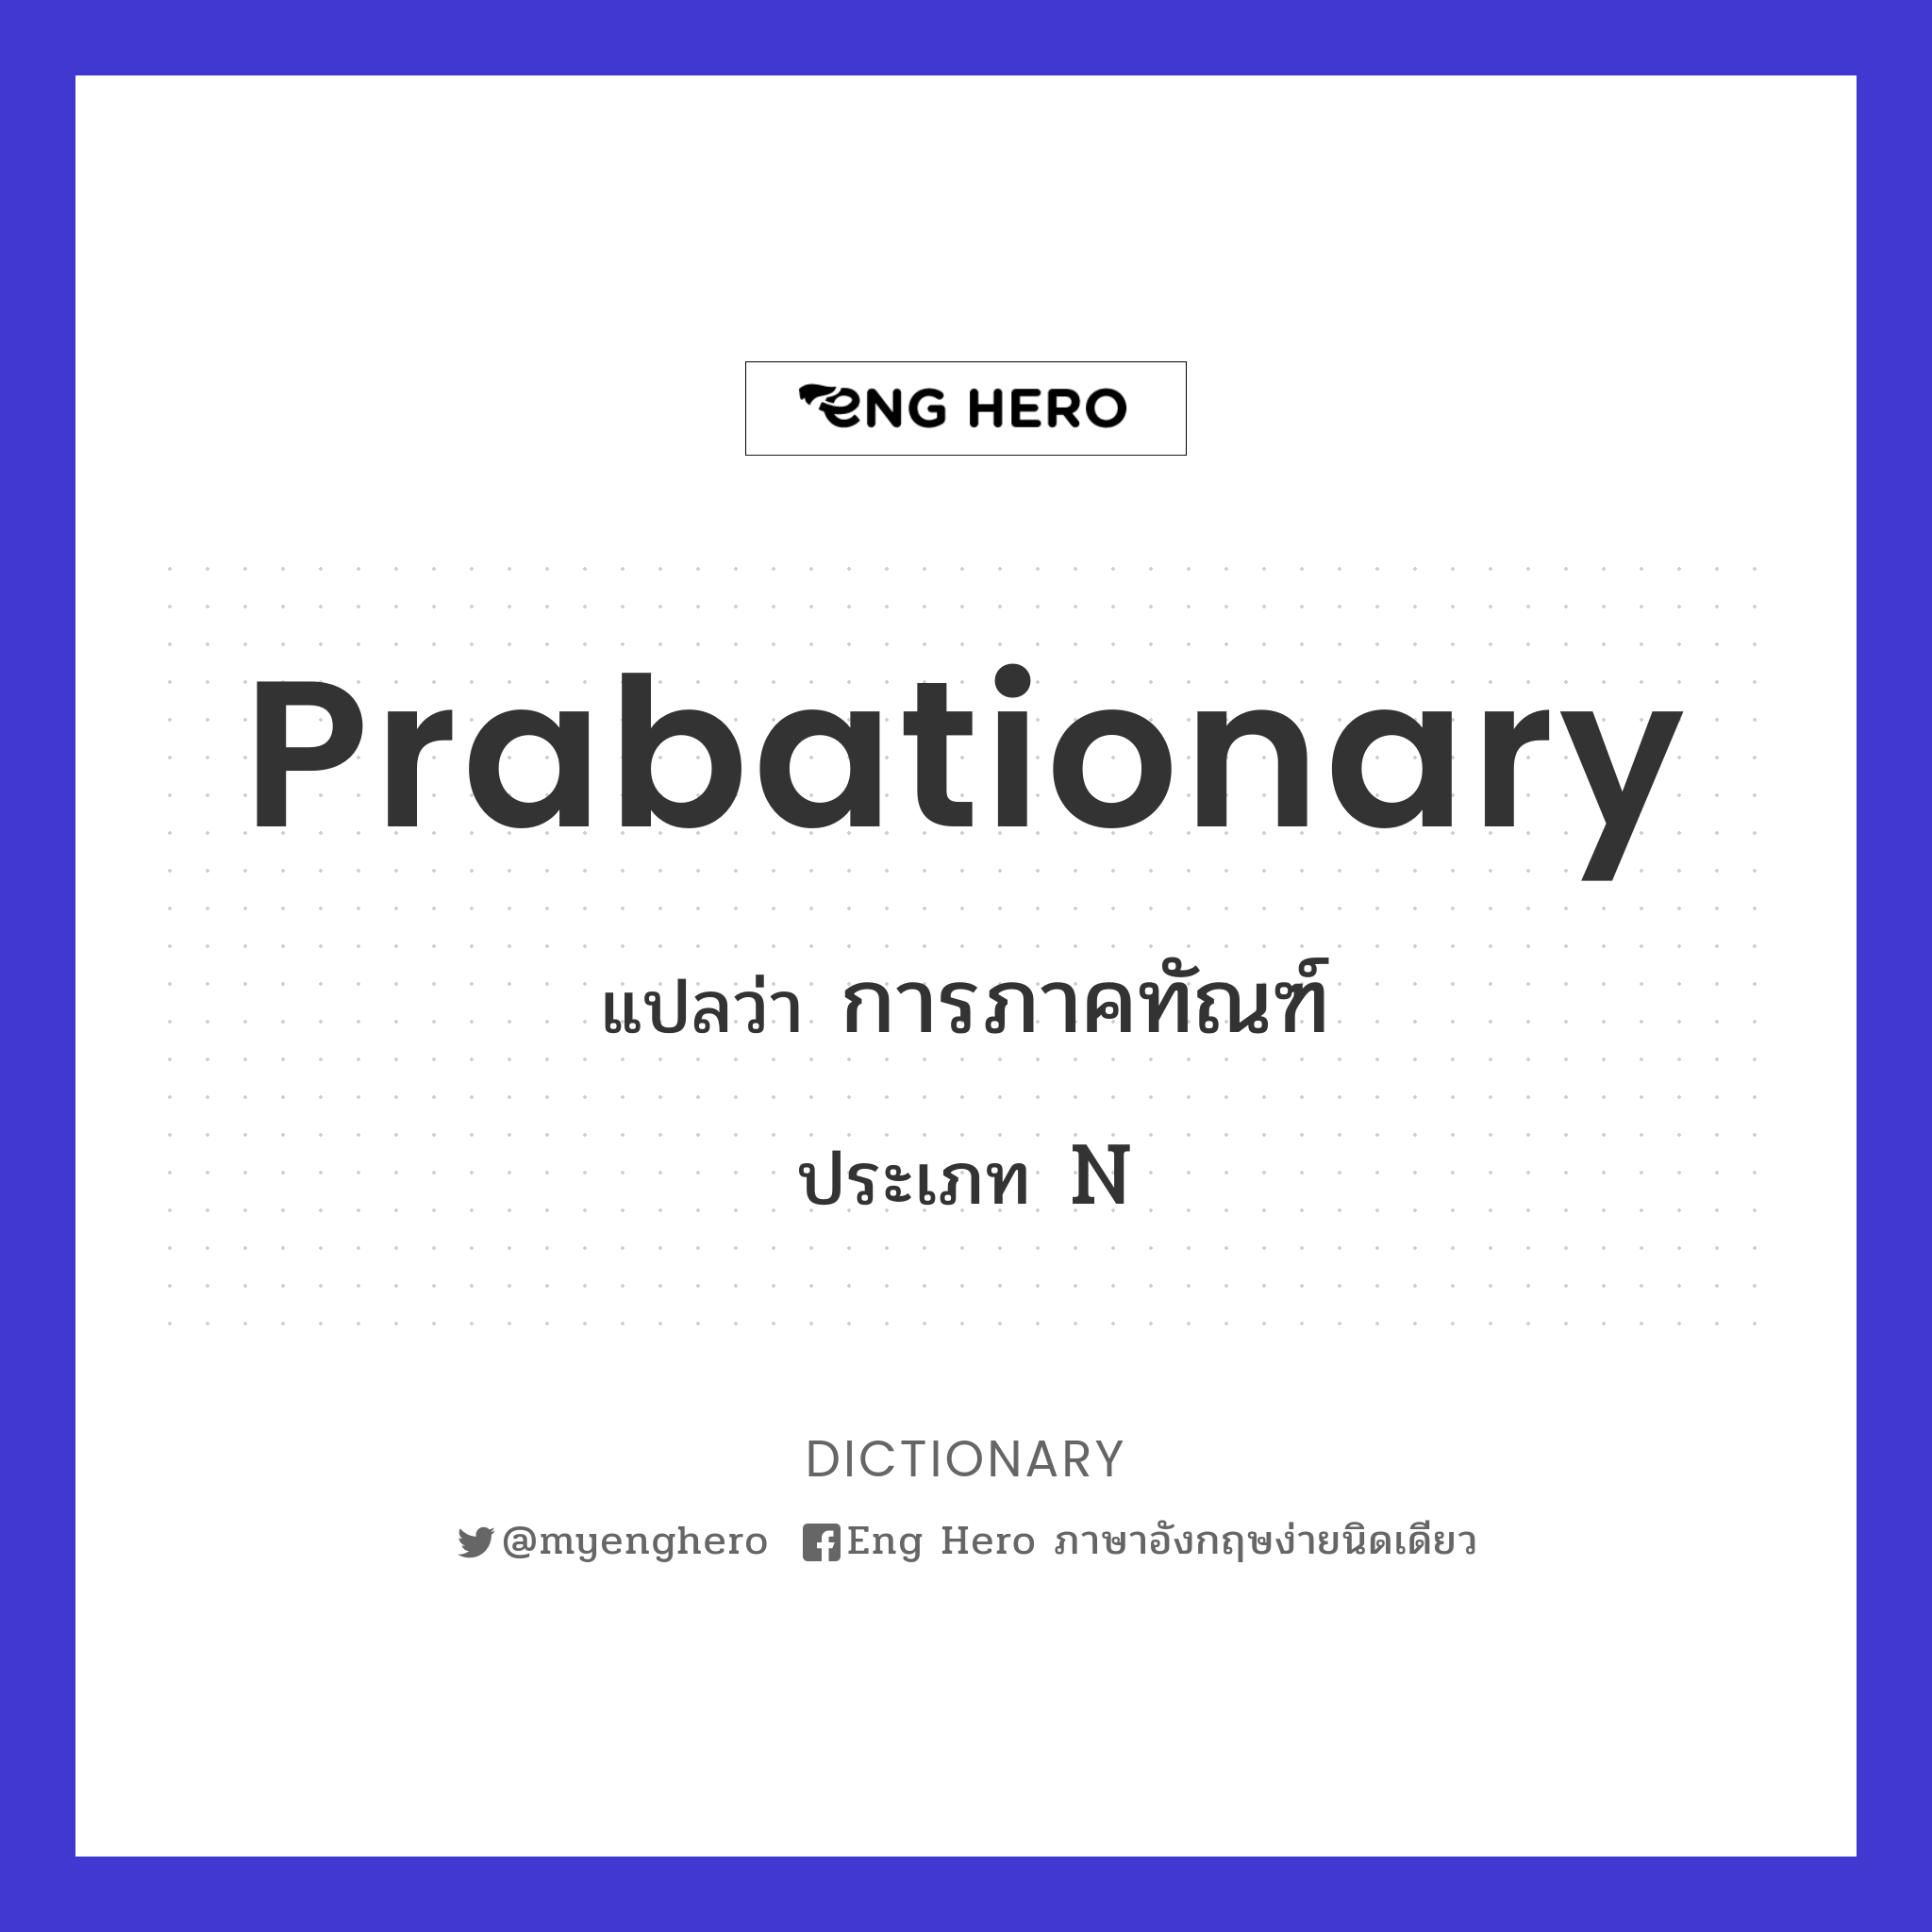 prabationary